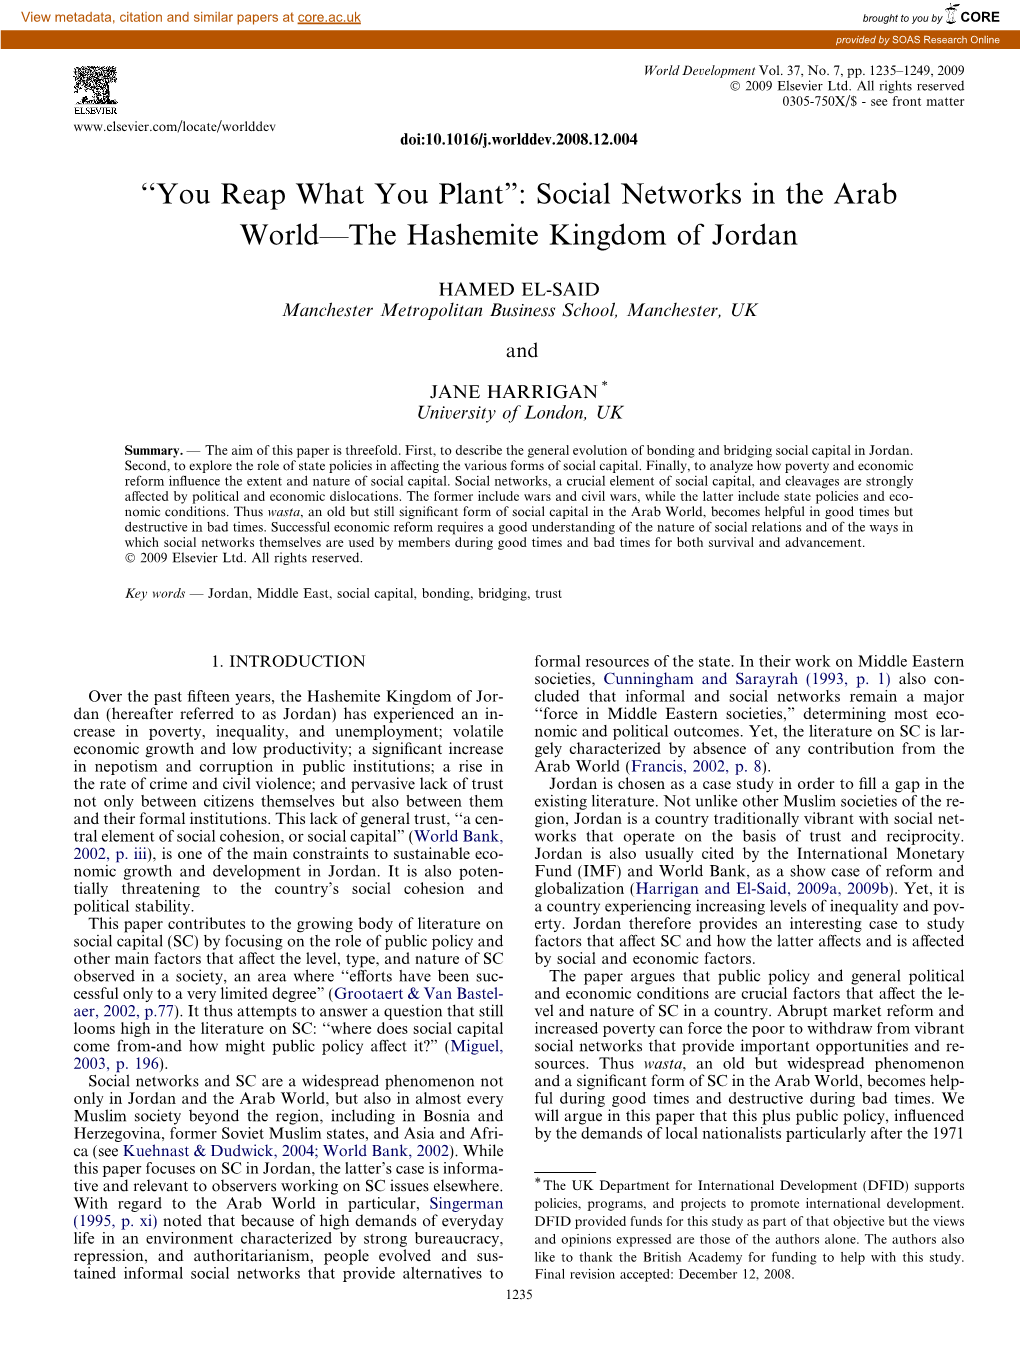 Social Networks in the Arab World—The Hashemite Kingdom of Jordan